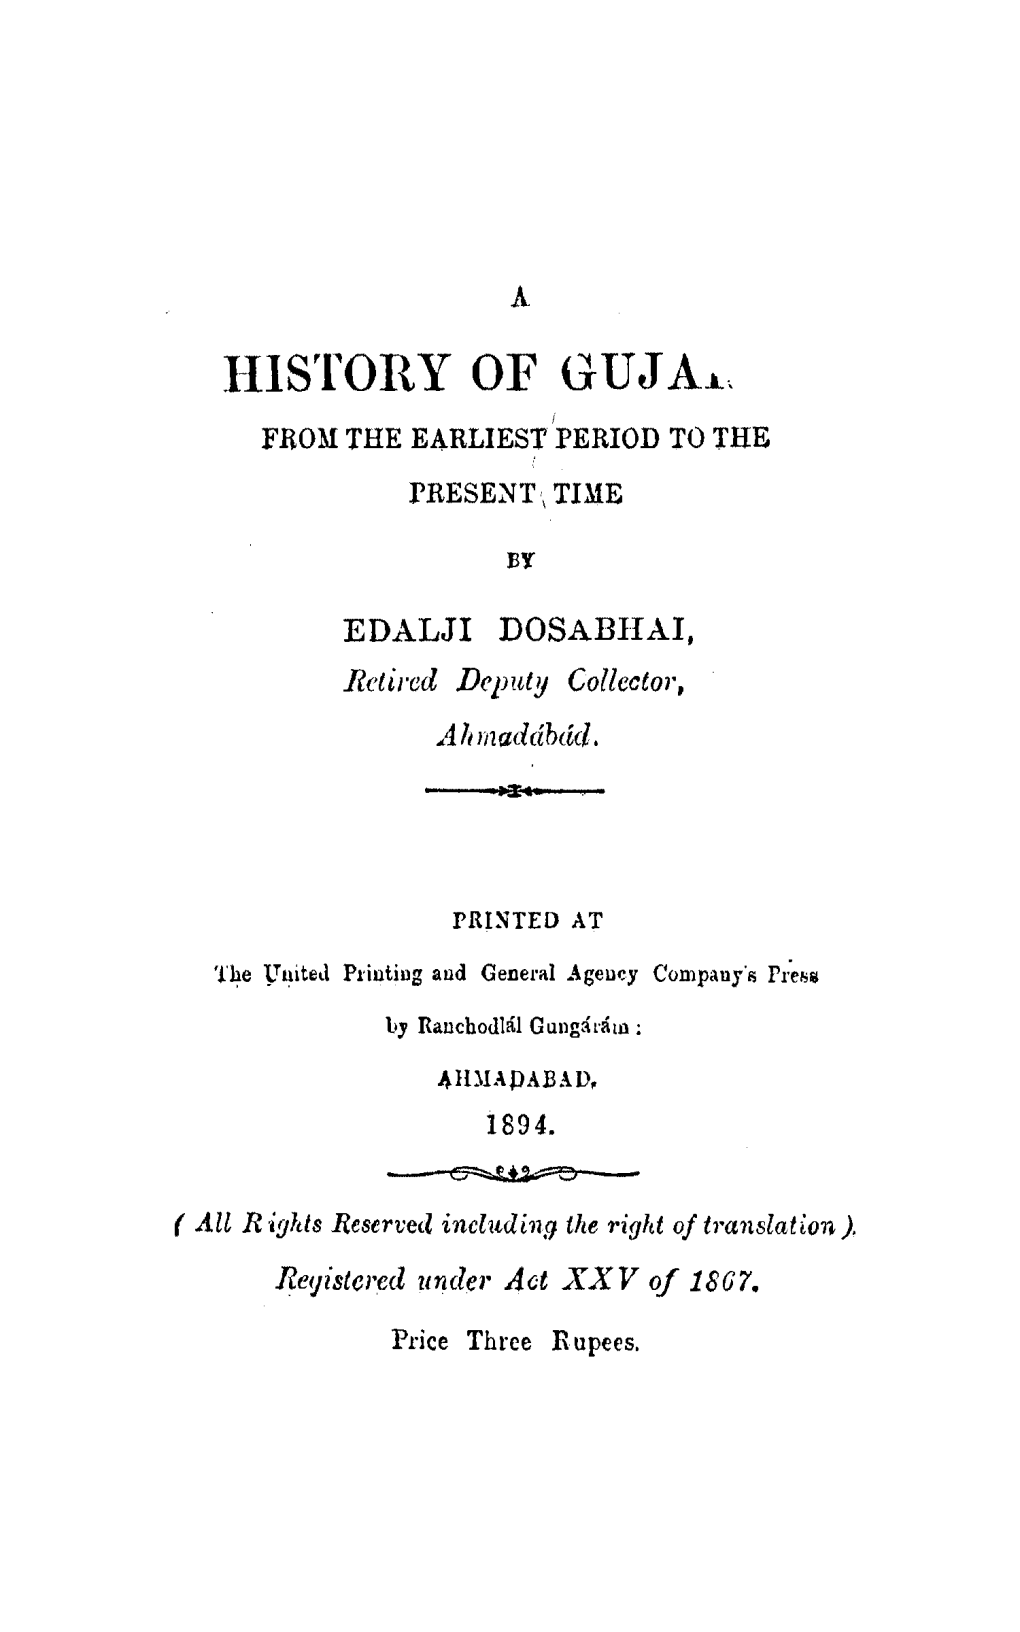 Liistory of GUJA